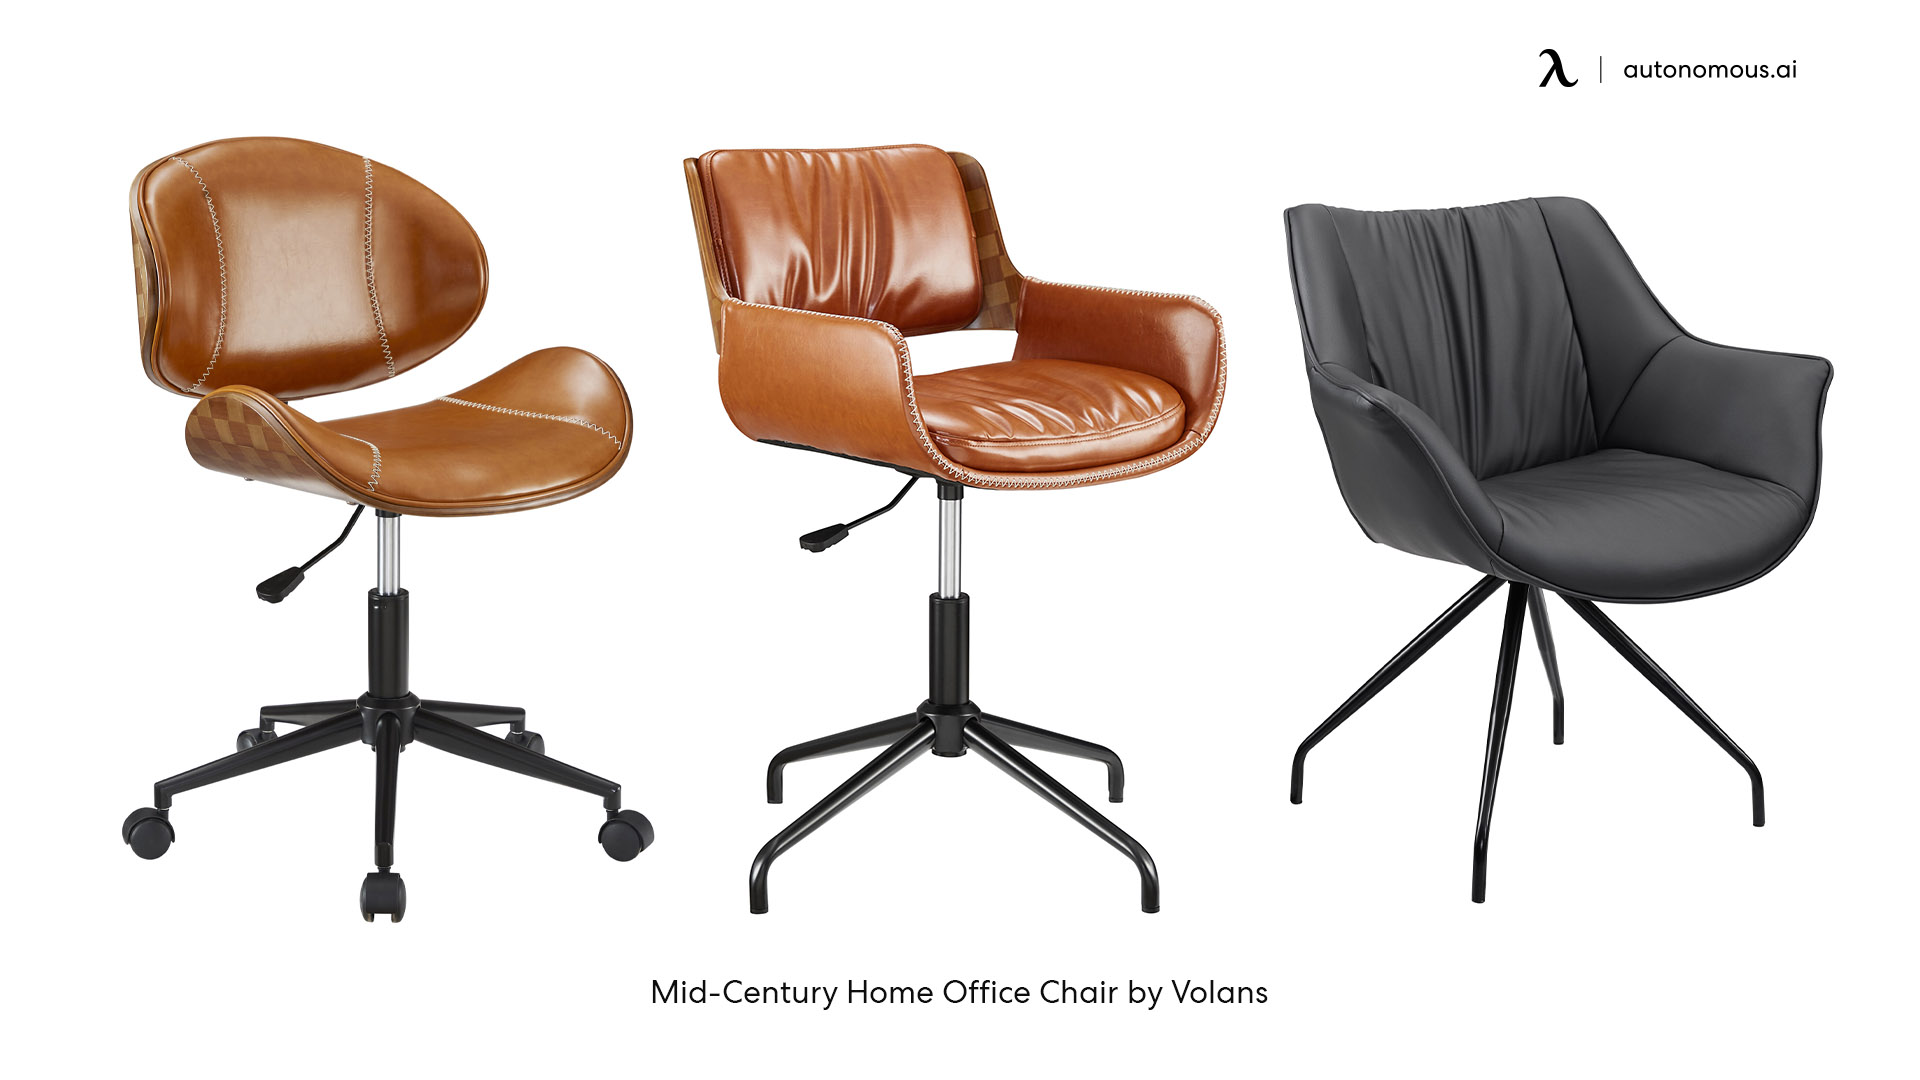 Volans mid-century office chair